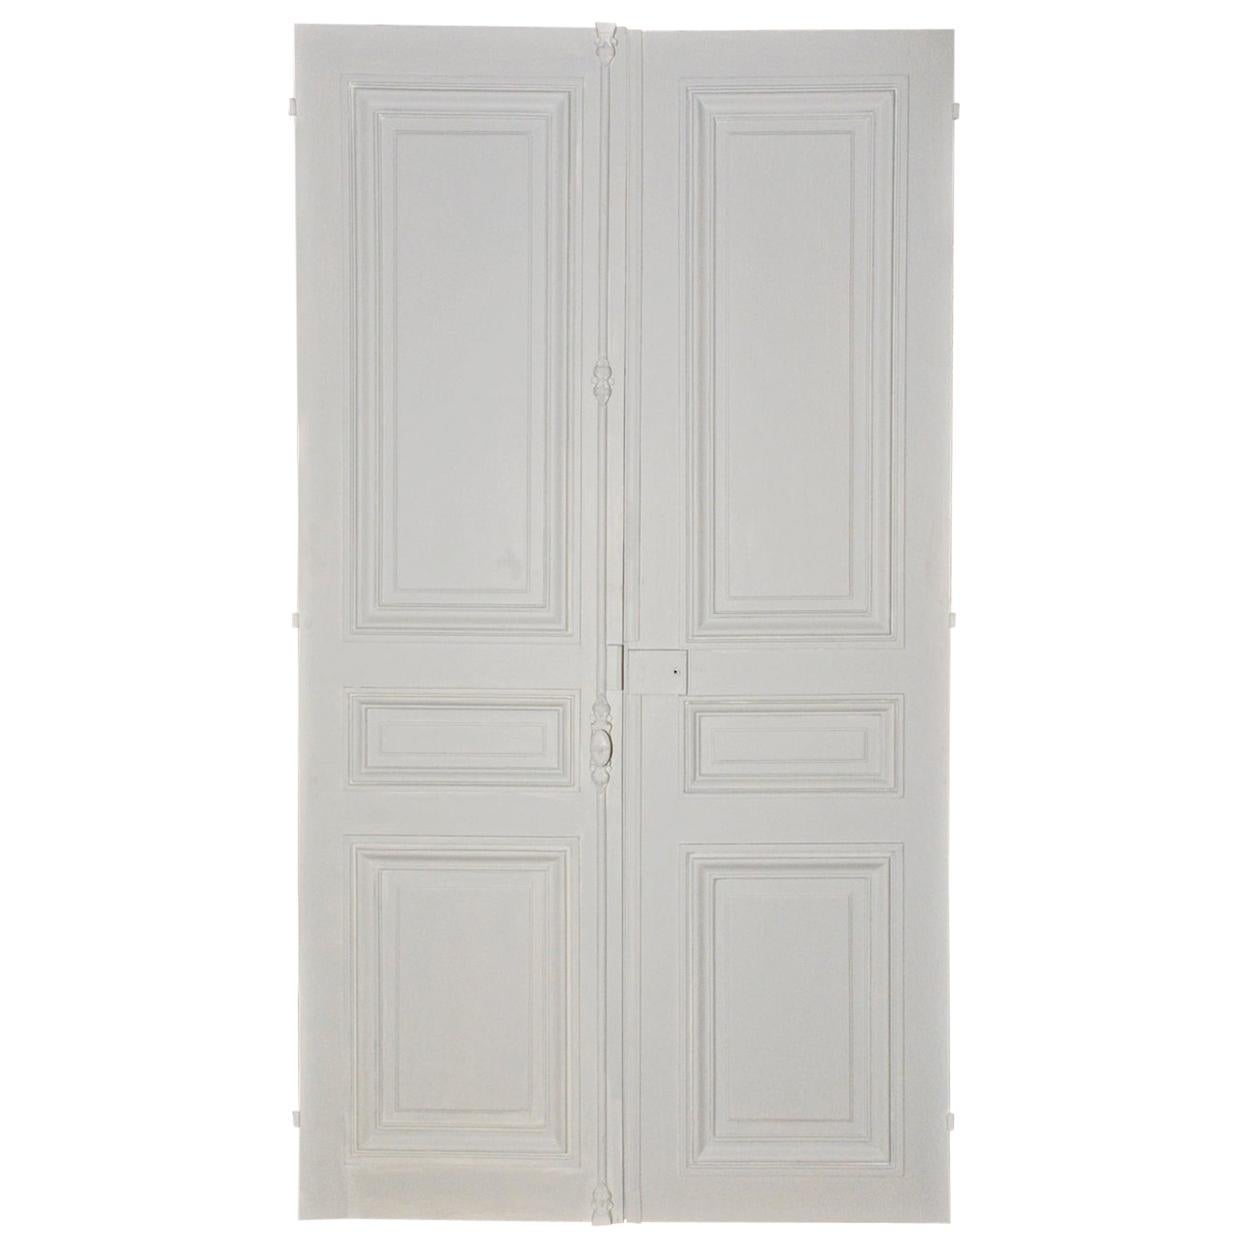 Antique French Double Interior Doors